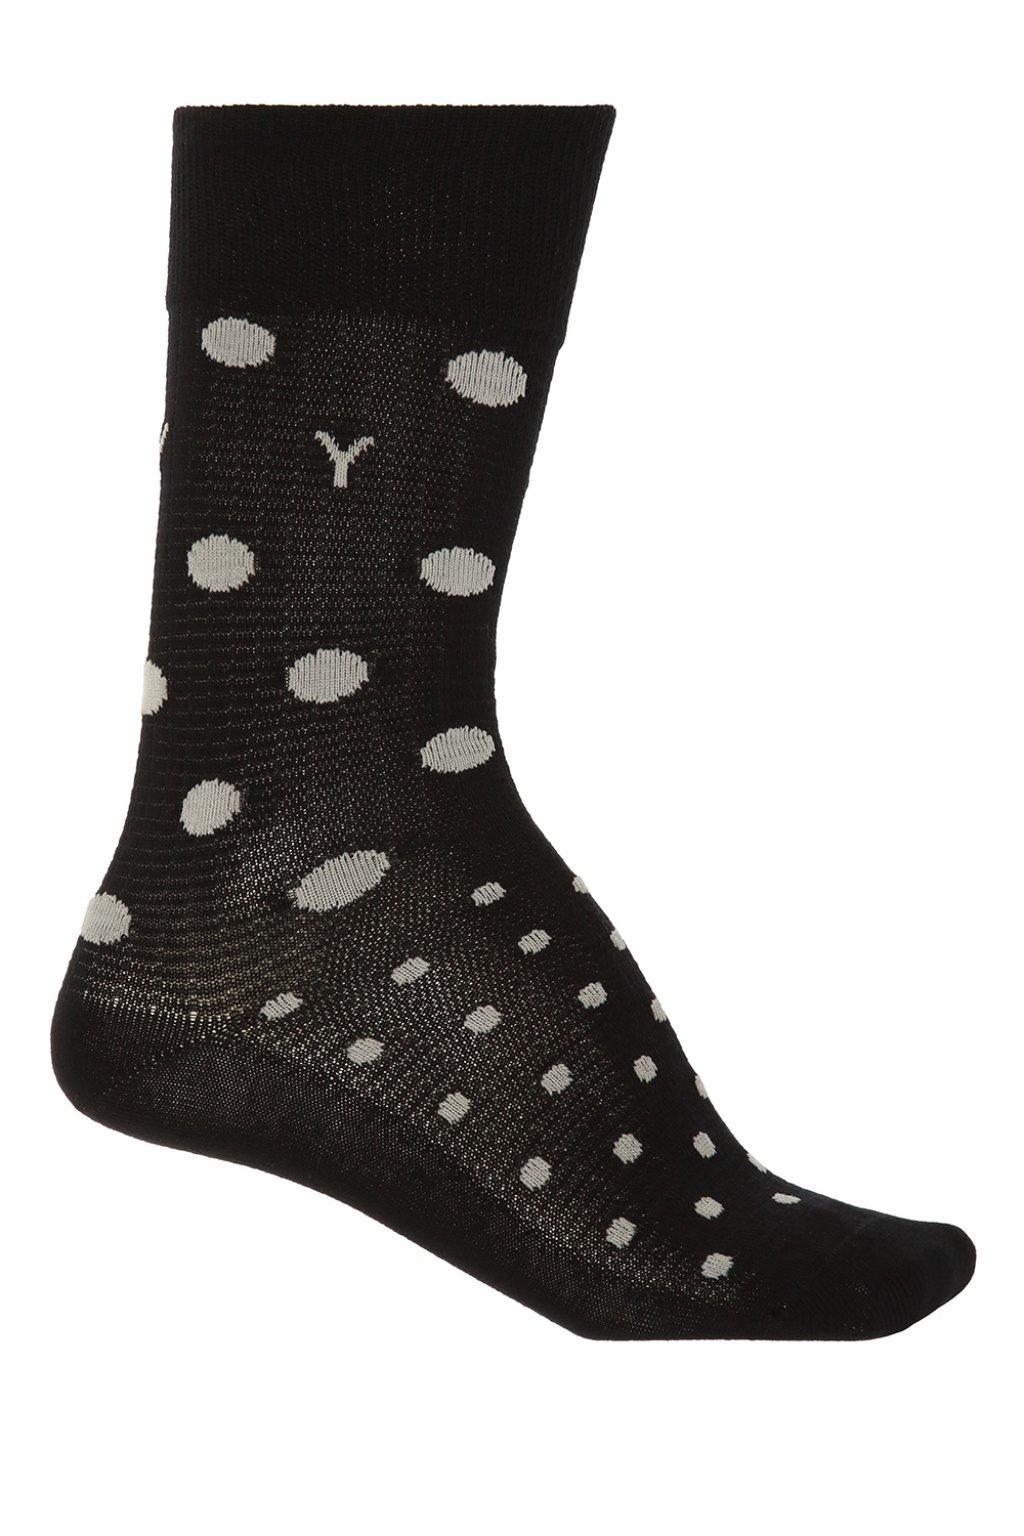 Yohji Yamamoto Cotton Polka Dot Socks in Black for Men - Lyst